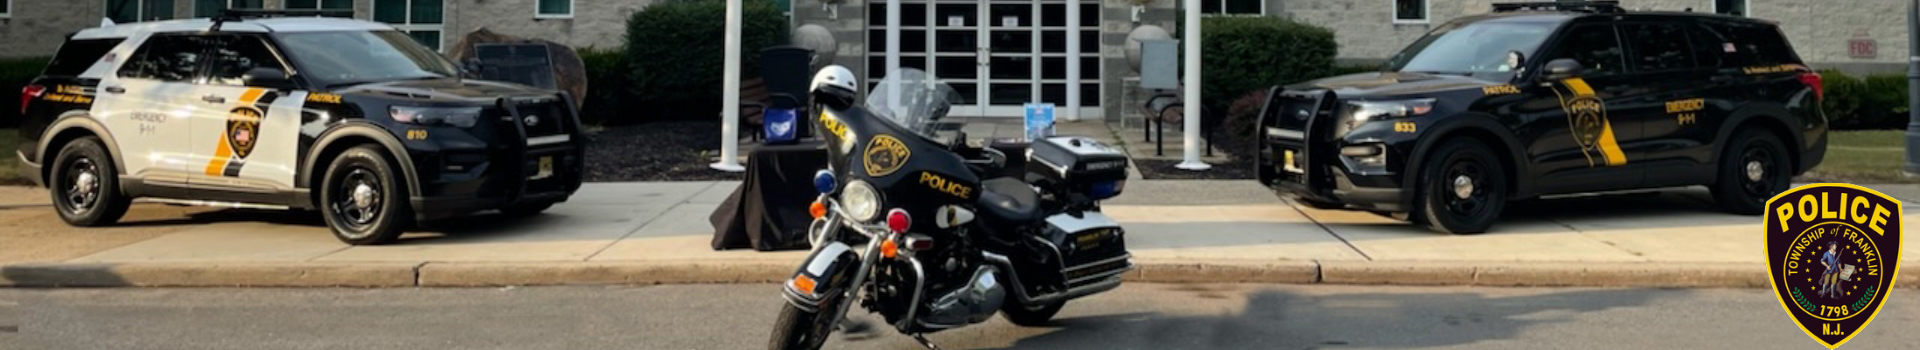 Franklin Township Police Department (Somerset, NJ), NJ Public Safety Jobs